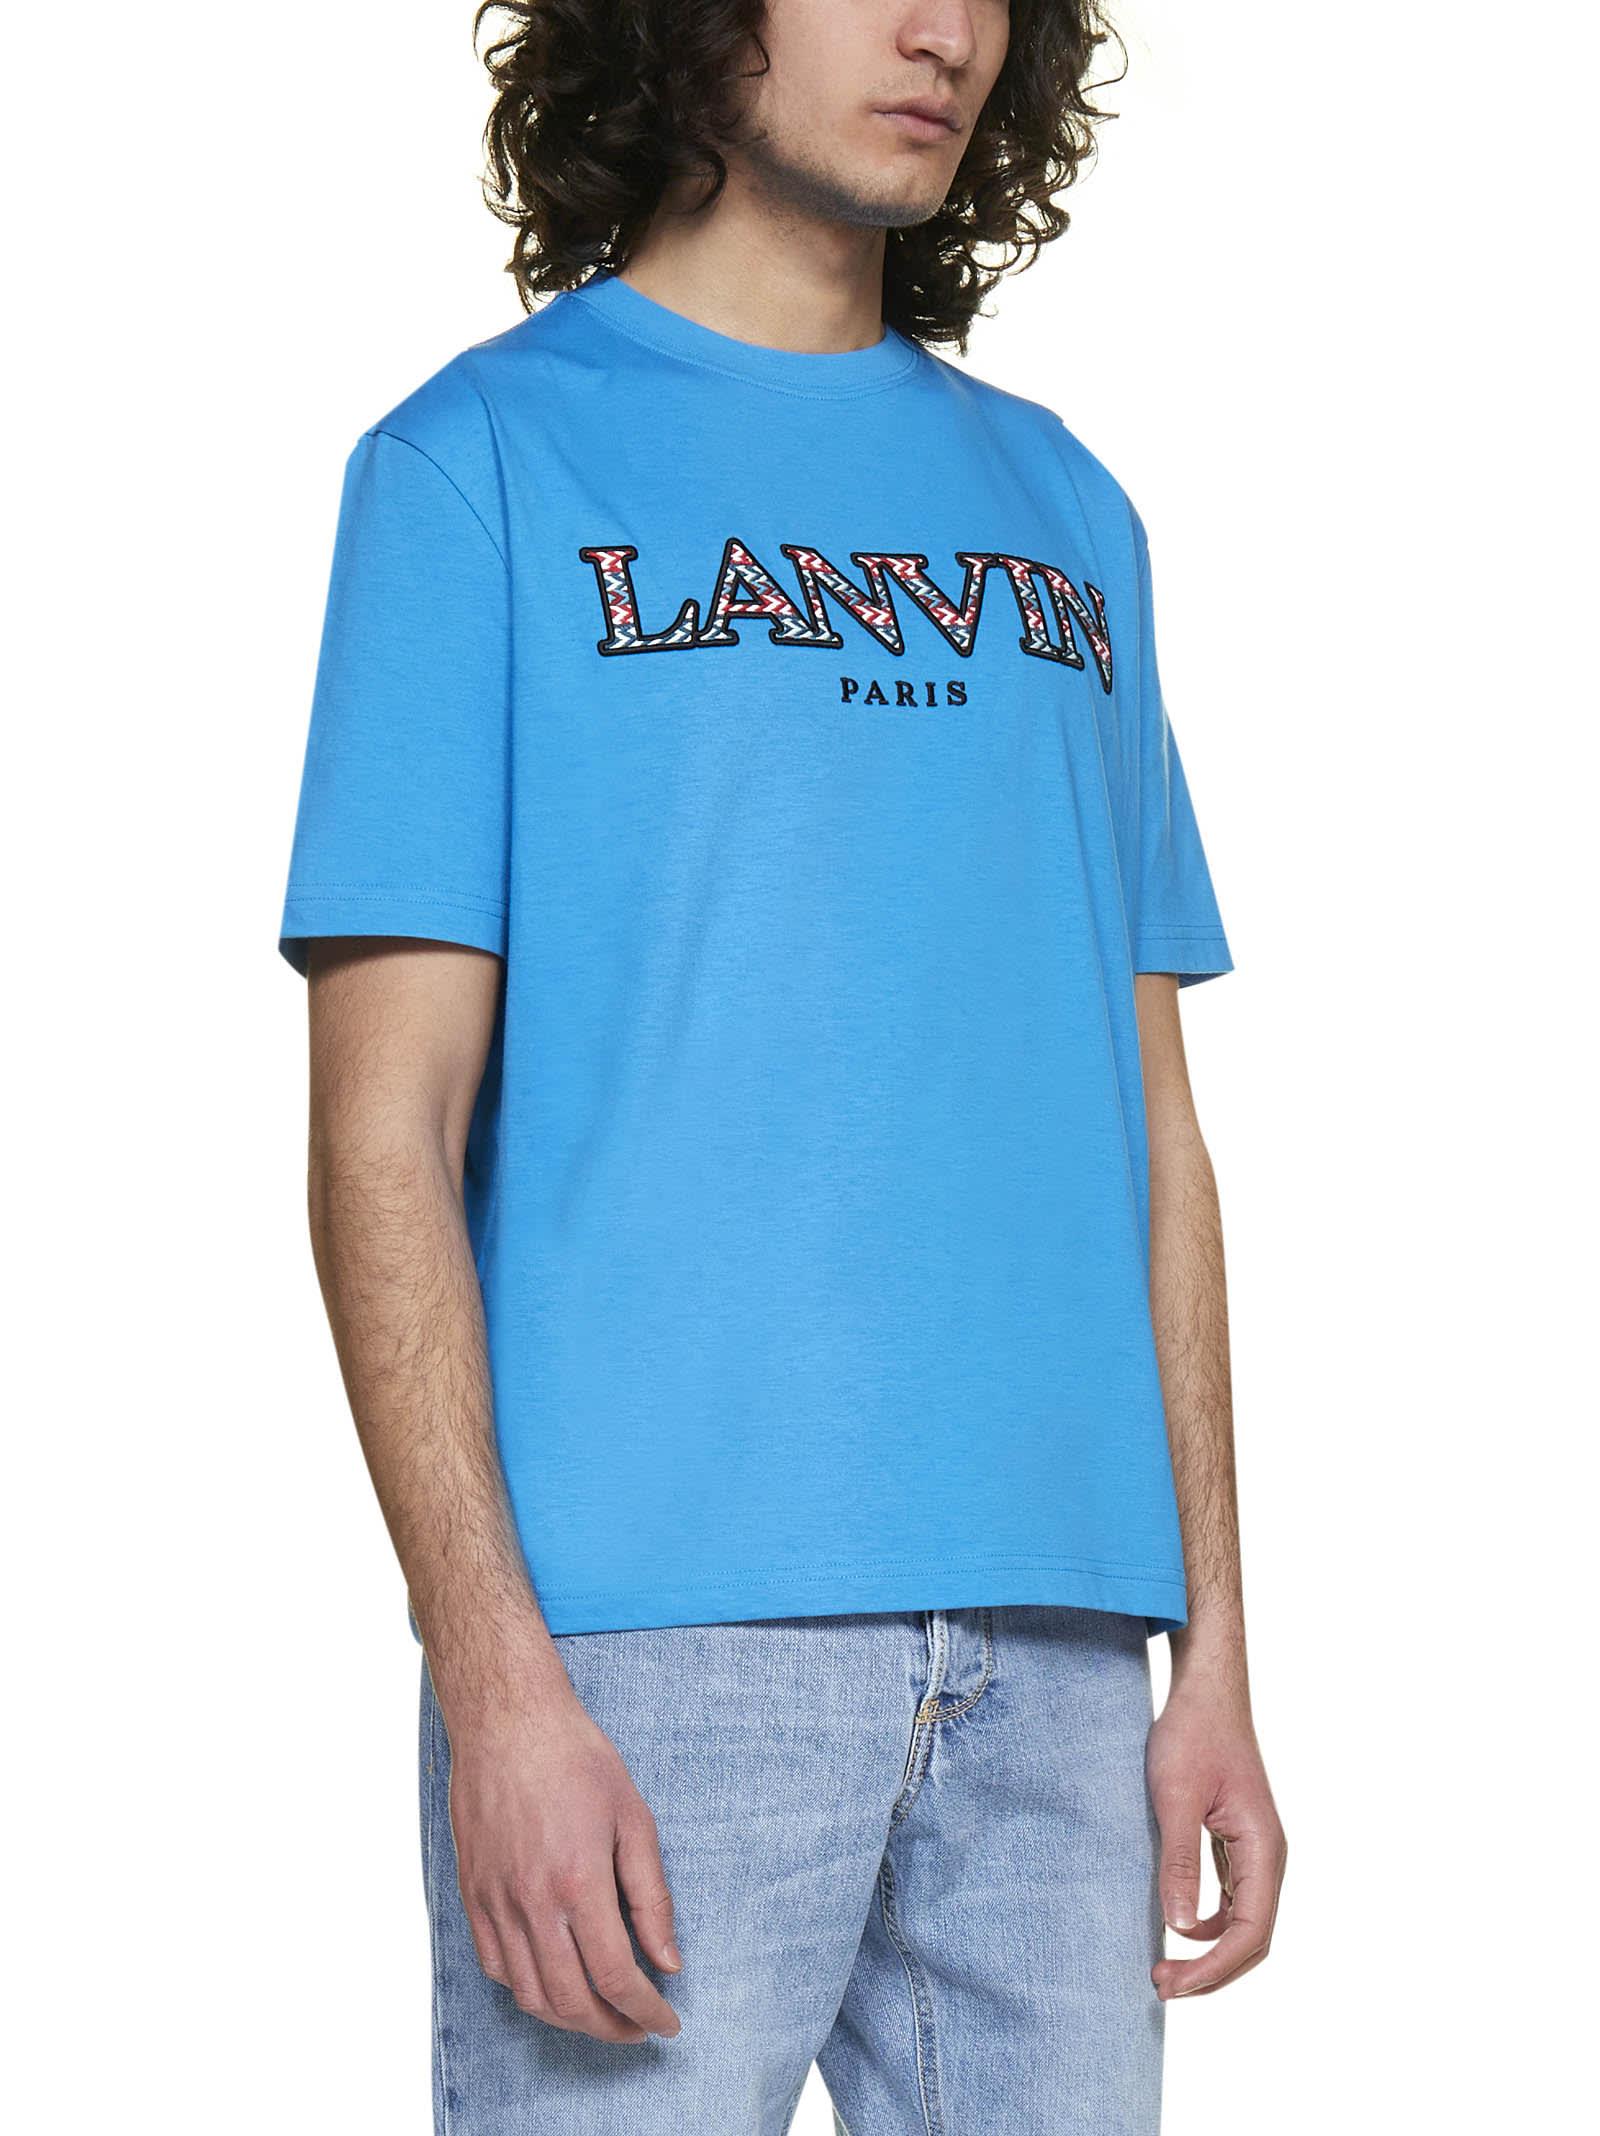 Lanvin T-shirt in Blue for Men - Lyst